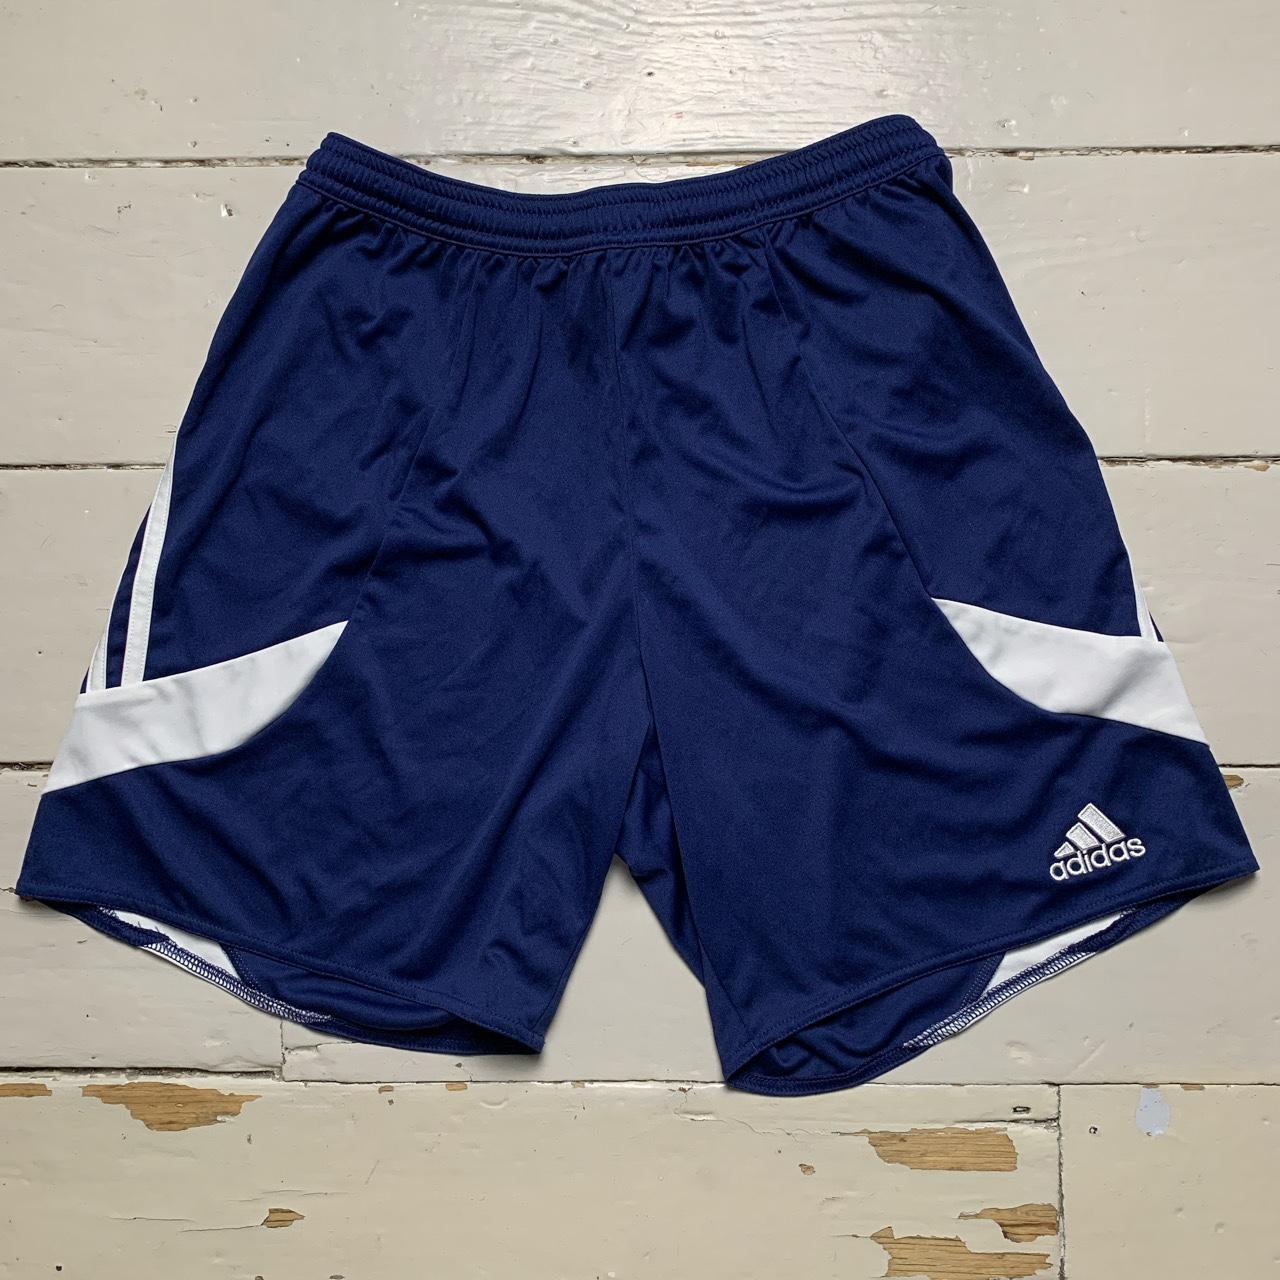 Adidas Football Short Navy and White